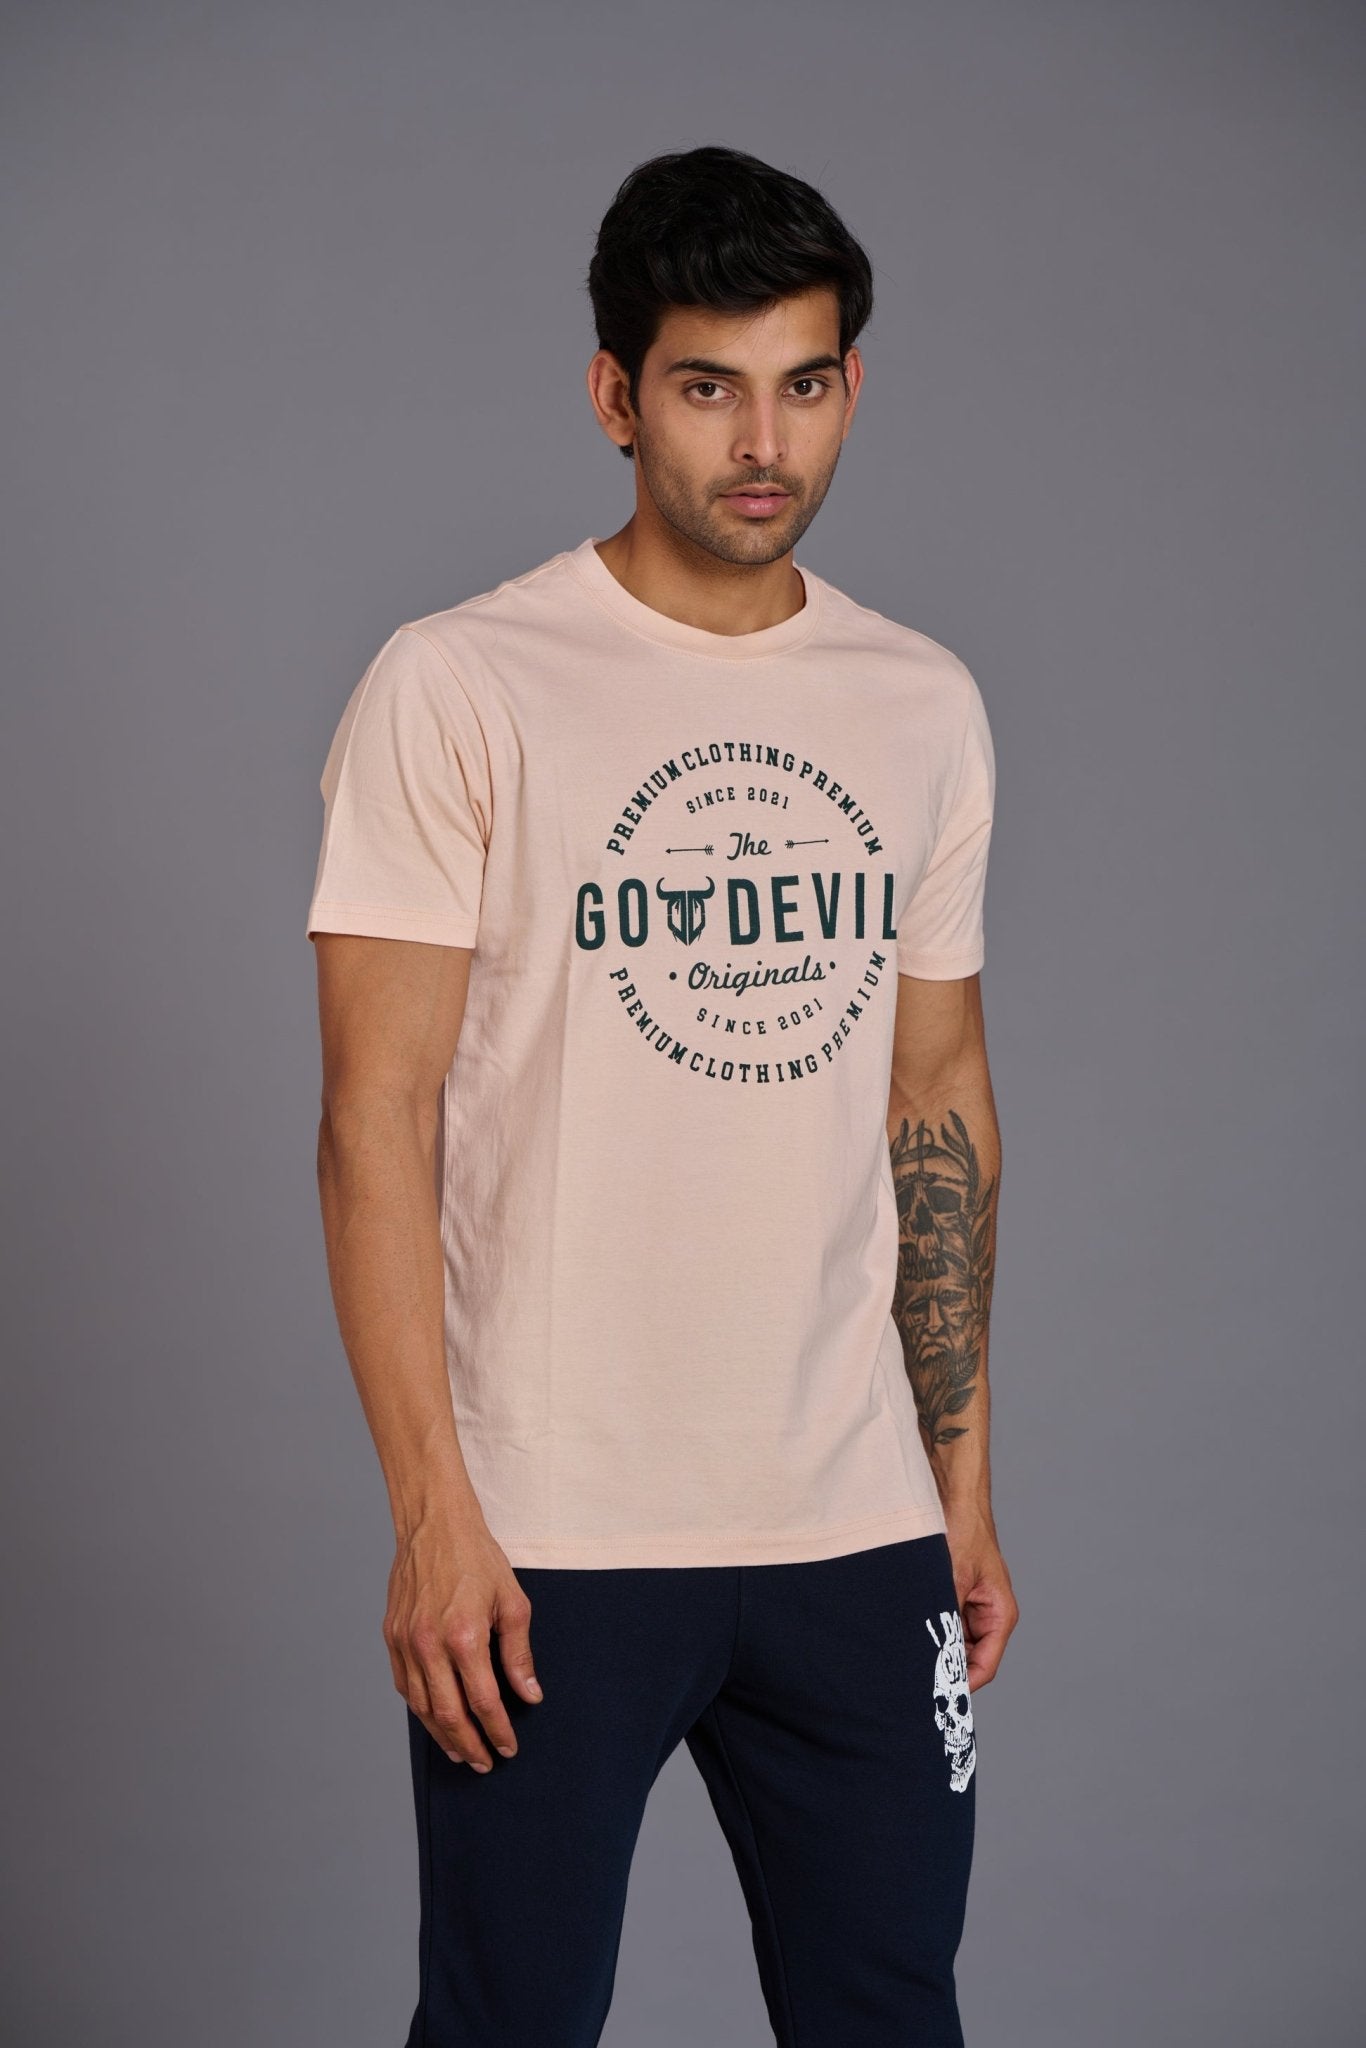 Go Devils Originals Printed Light Color T-Shirt for Men - Go Devil